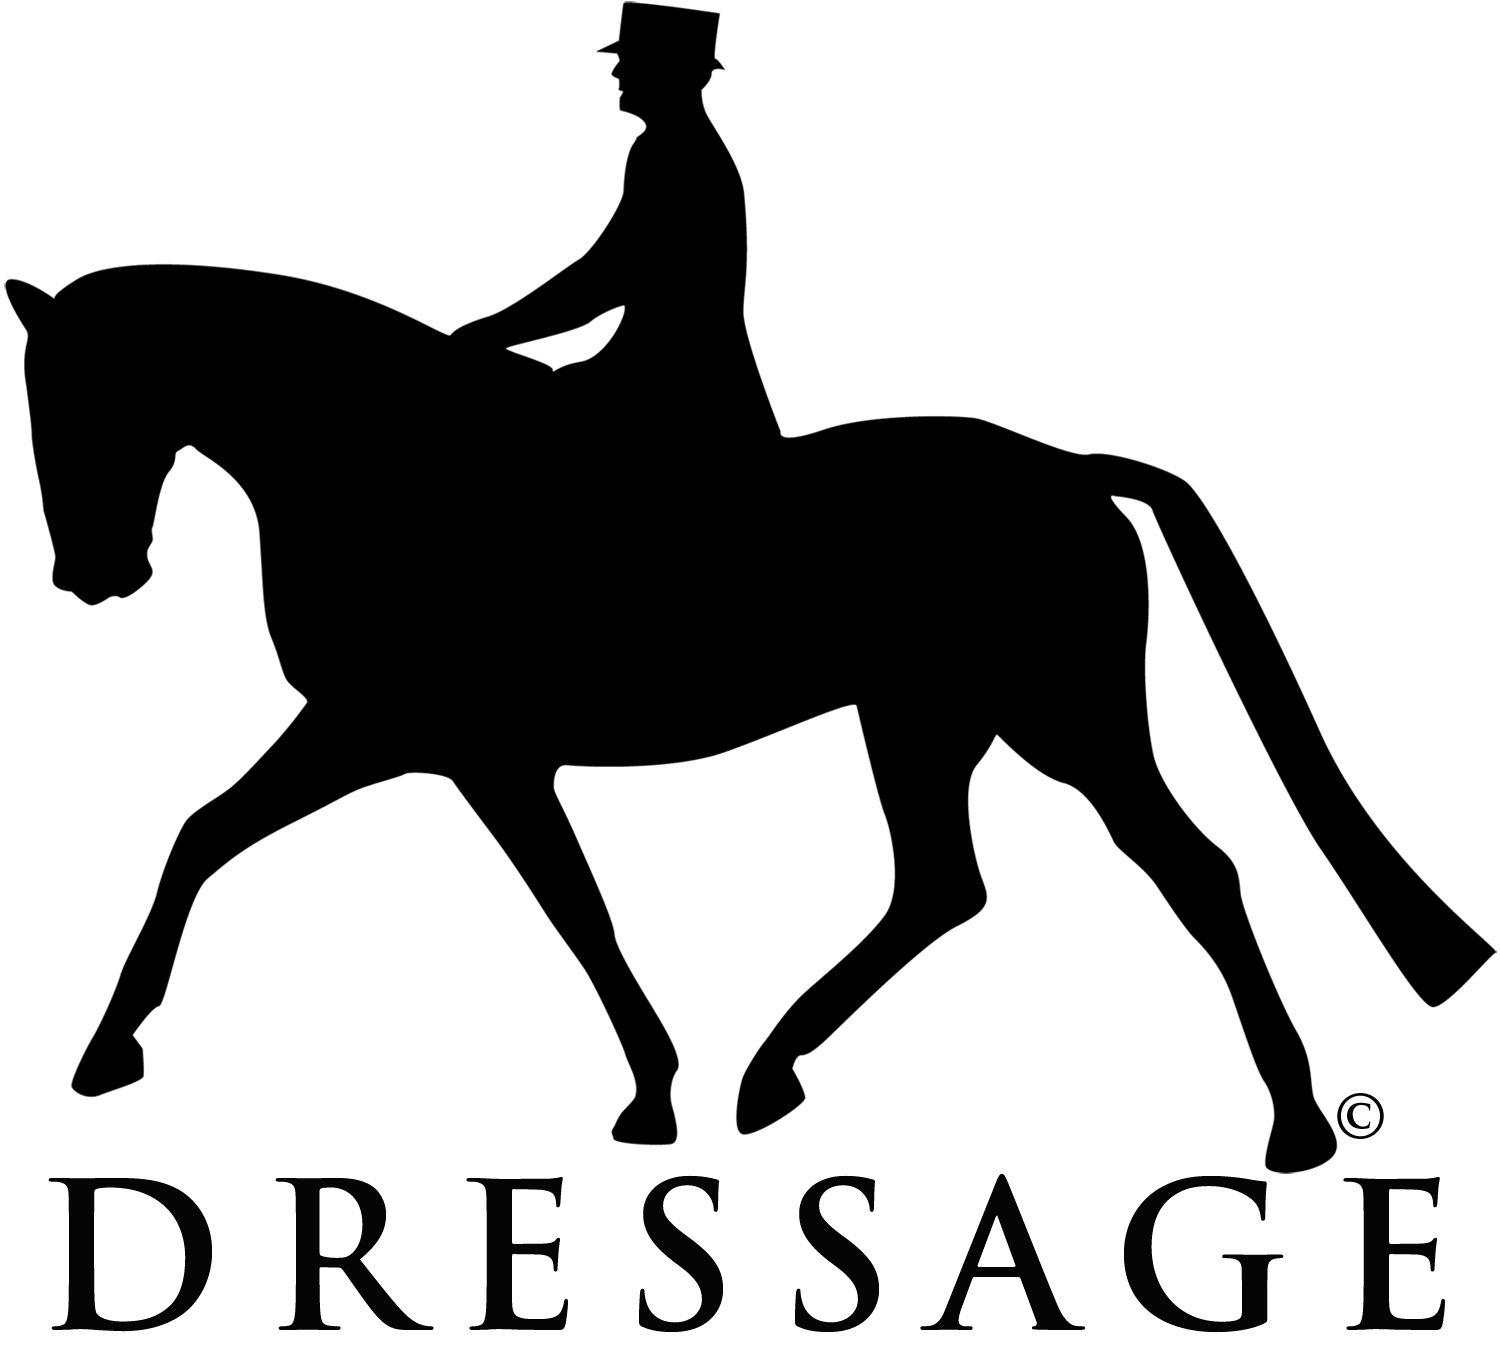 Dressage Horse Logo - Free Dressage Horse Silhouette, Download Free Clip Art, Free Clip ...